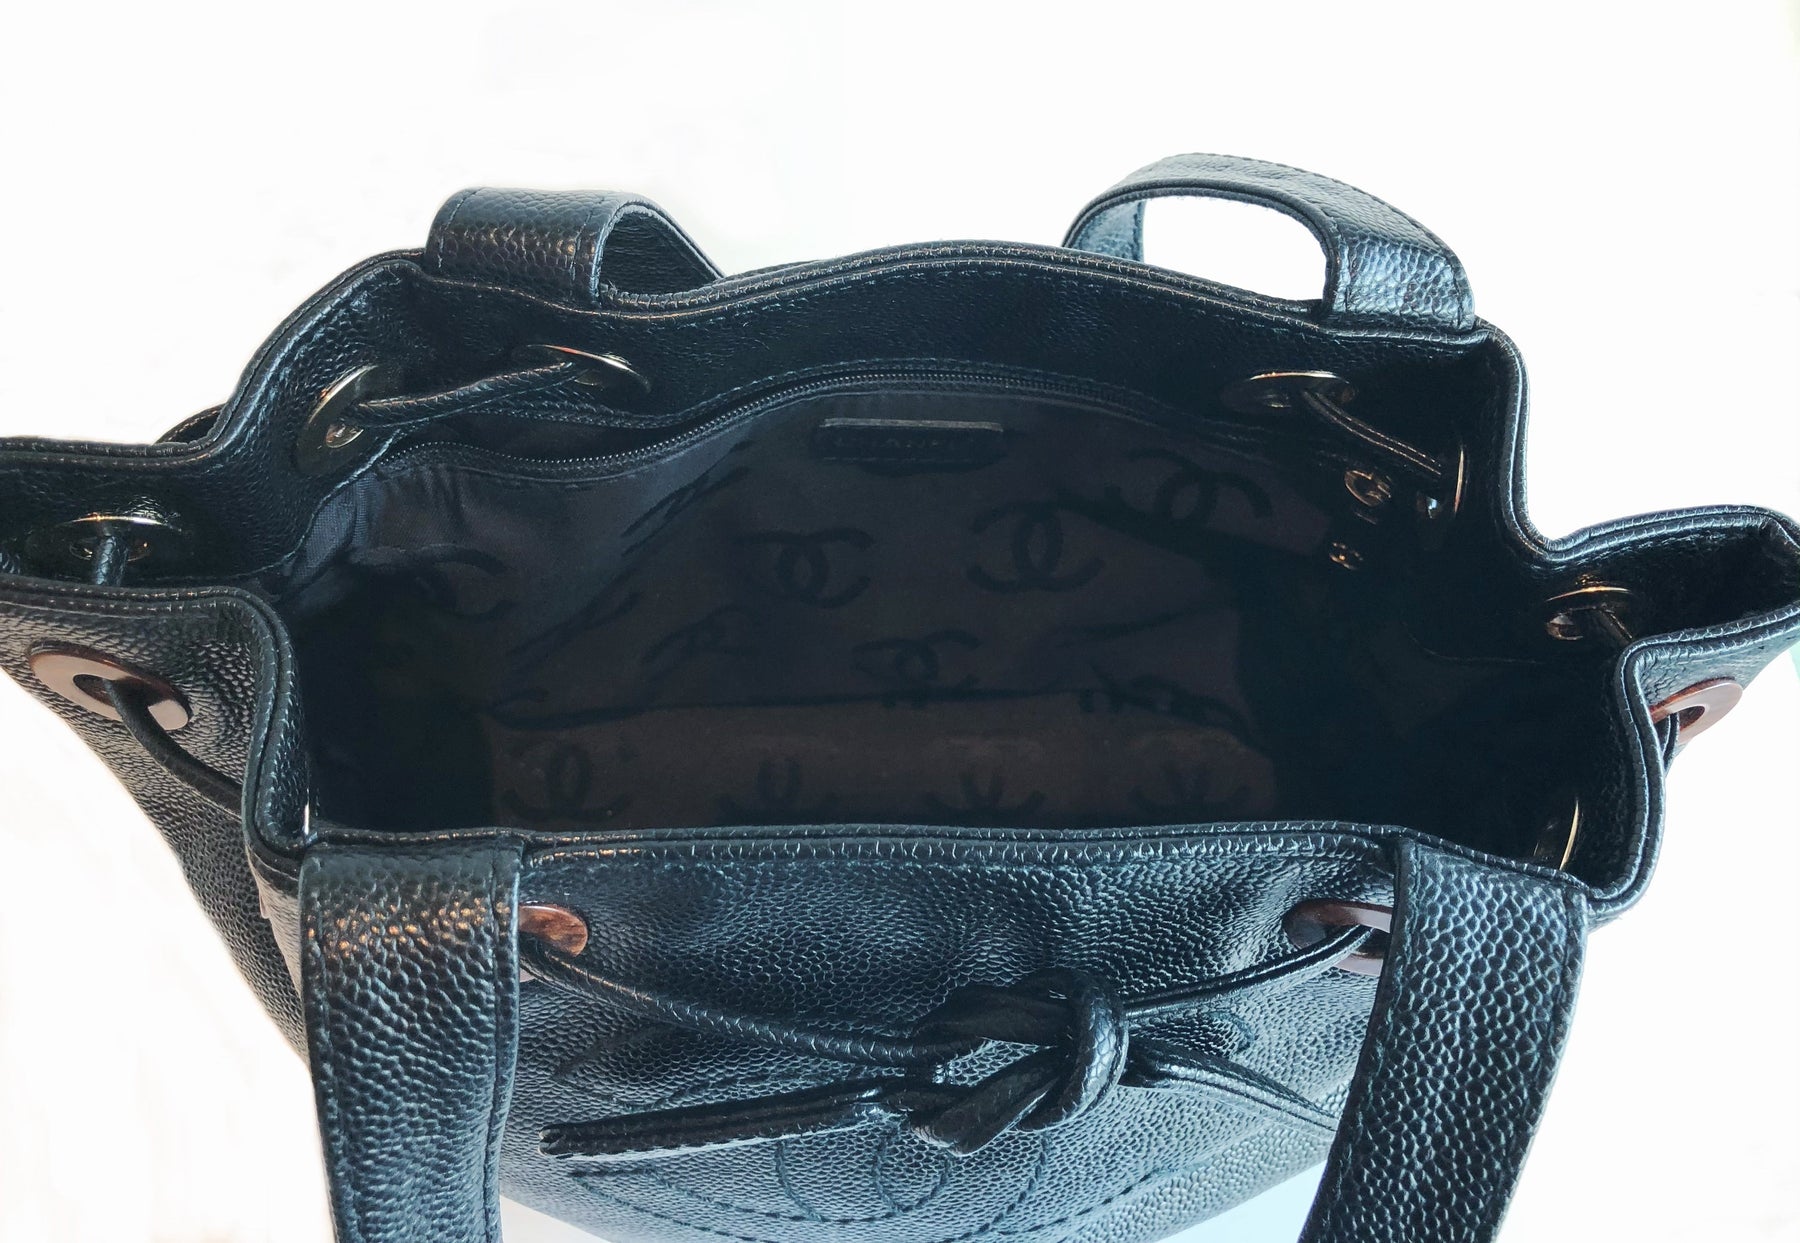 Chanel Caviar Leather Bucket Bag Black Inside of Bag